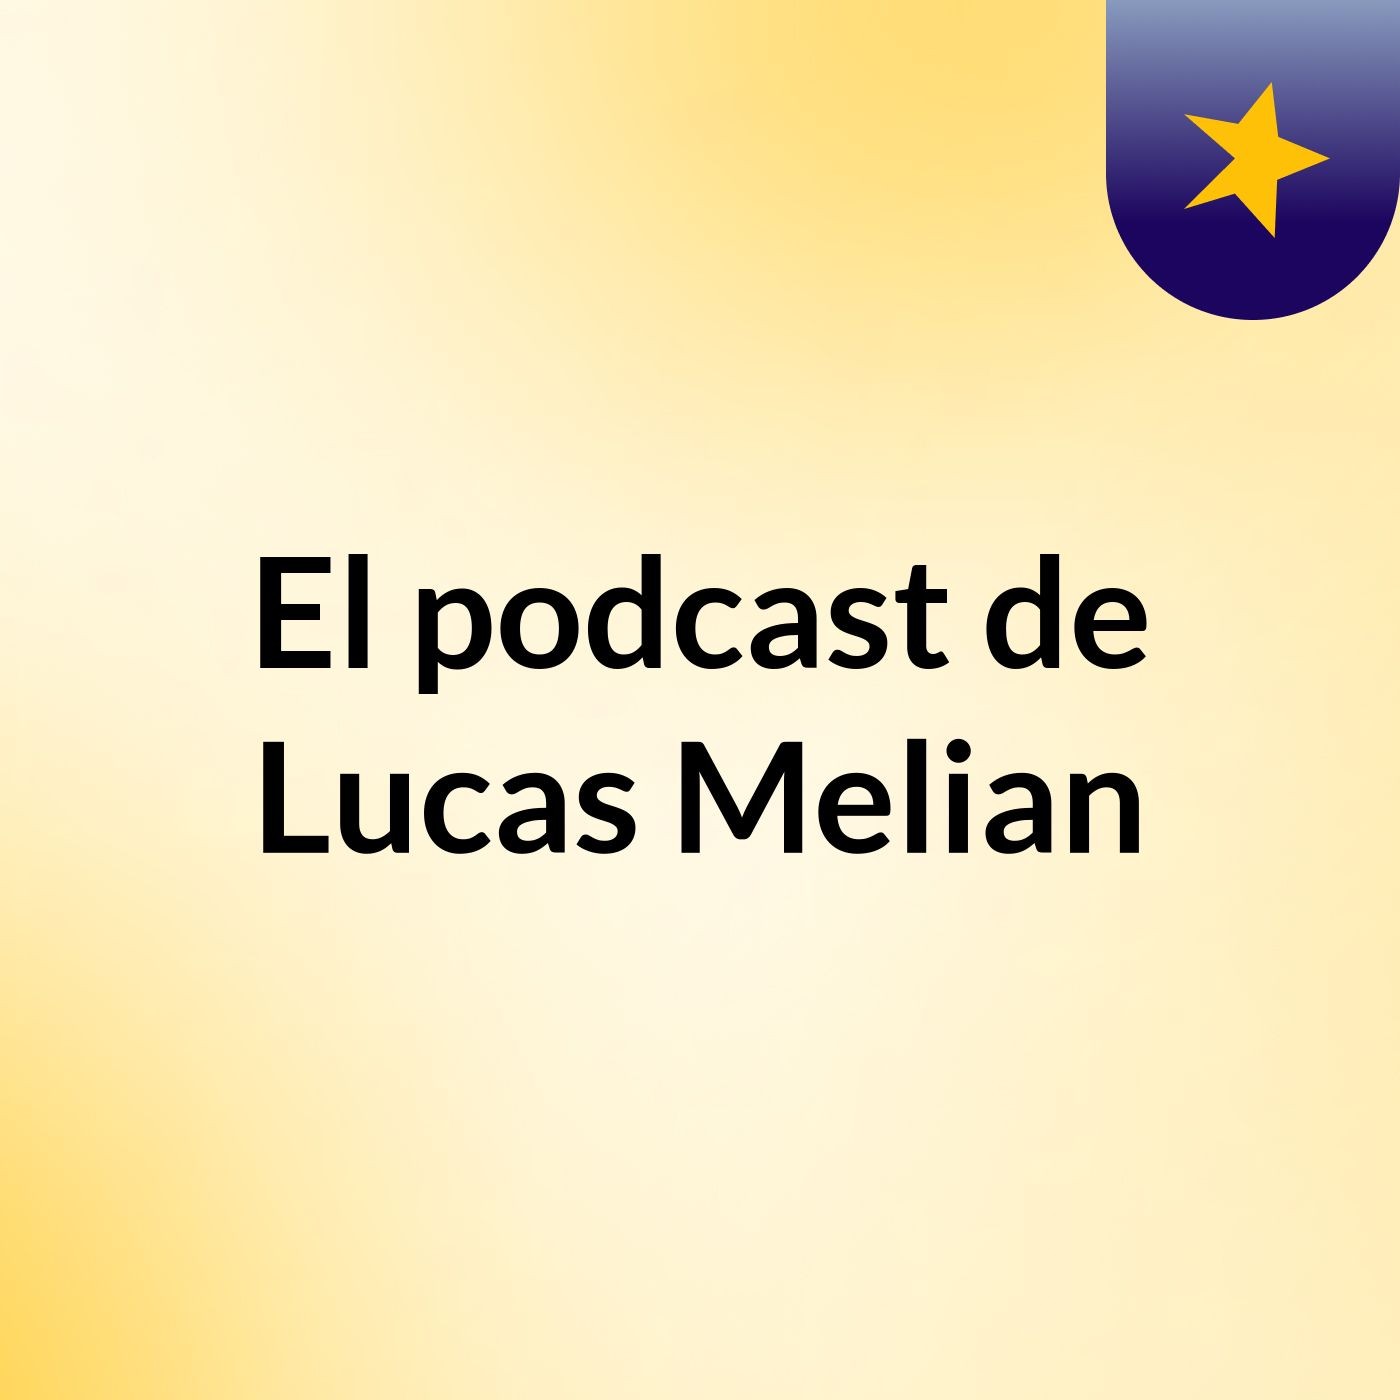 El podcast de Lucas Melian